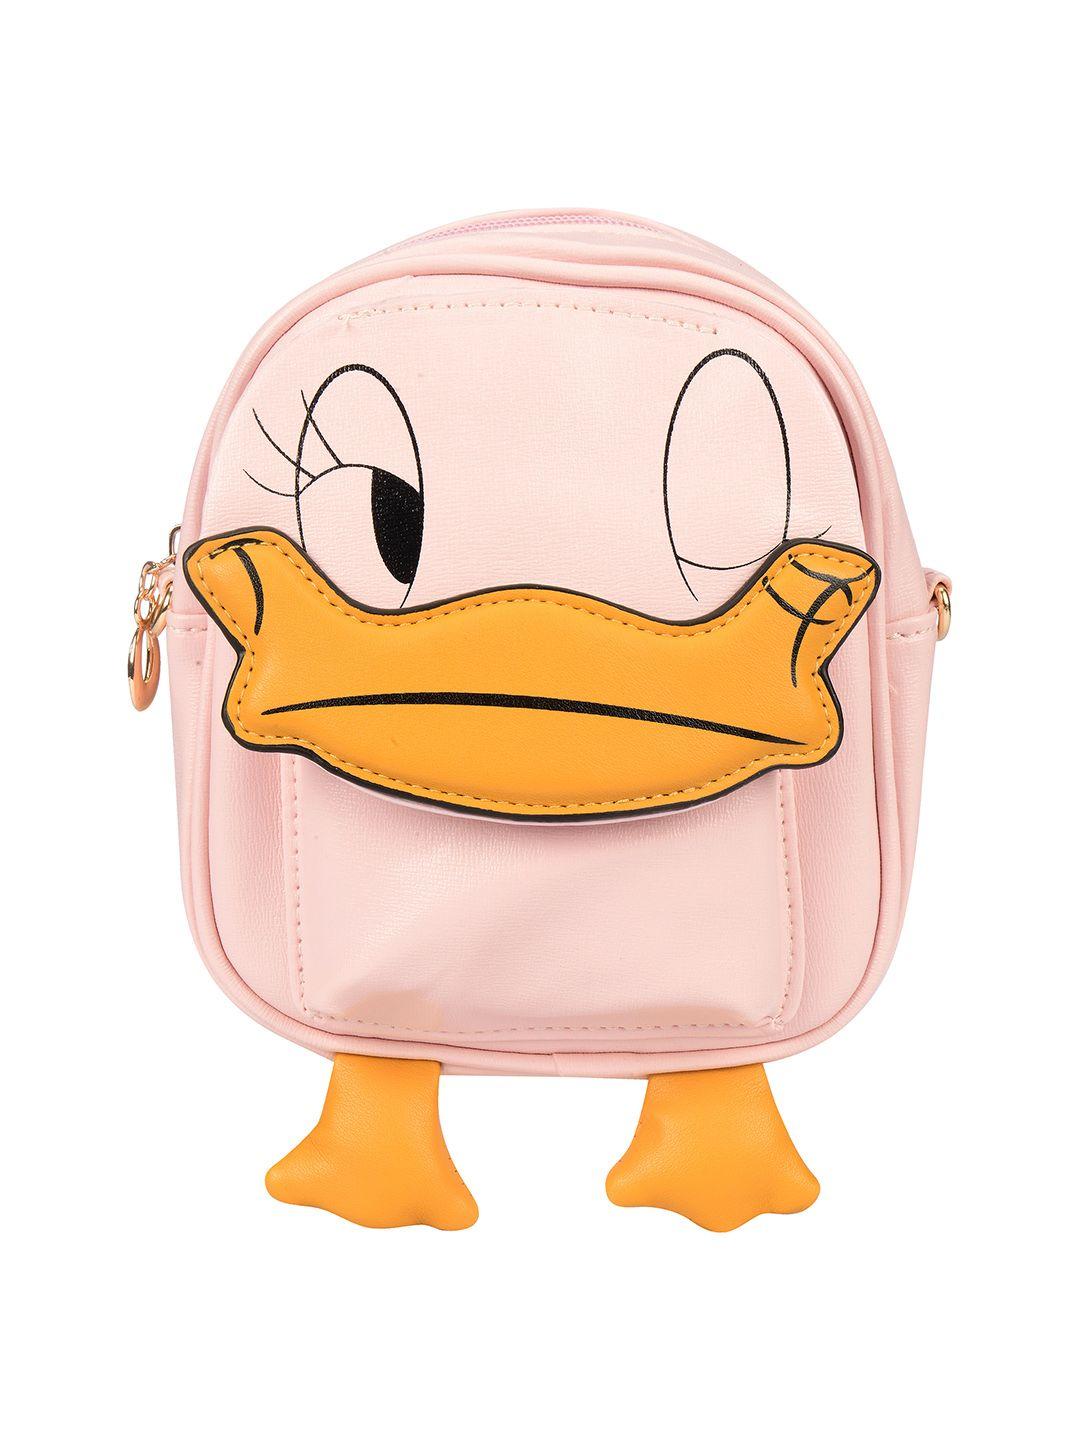 kids on board unisex kids pink & orange graphic backpack